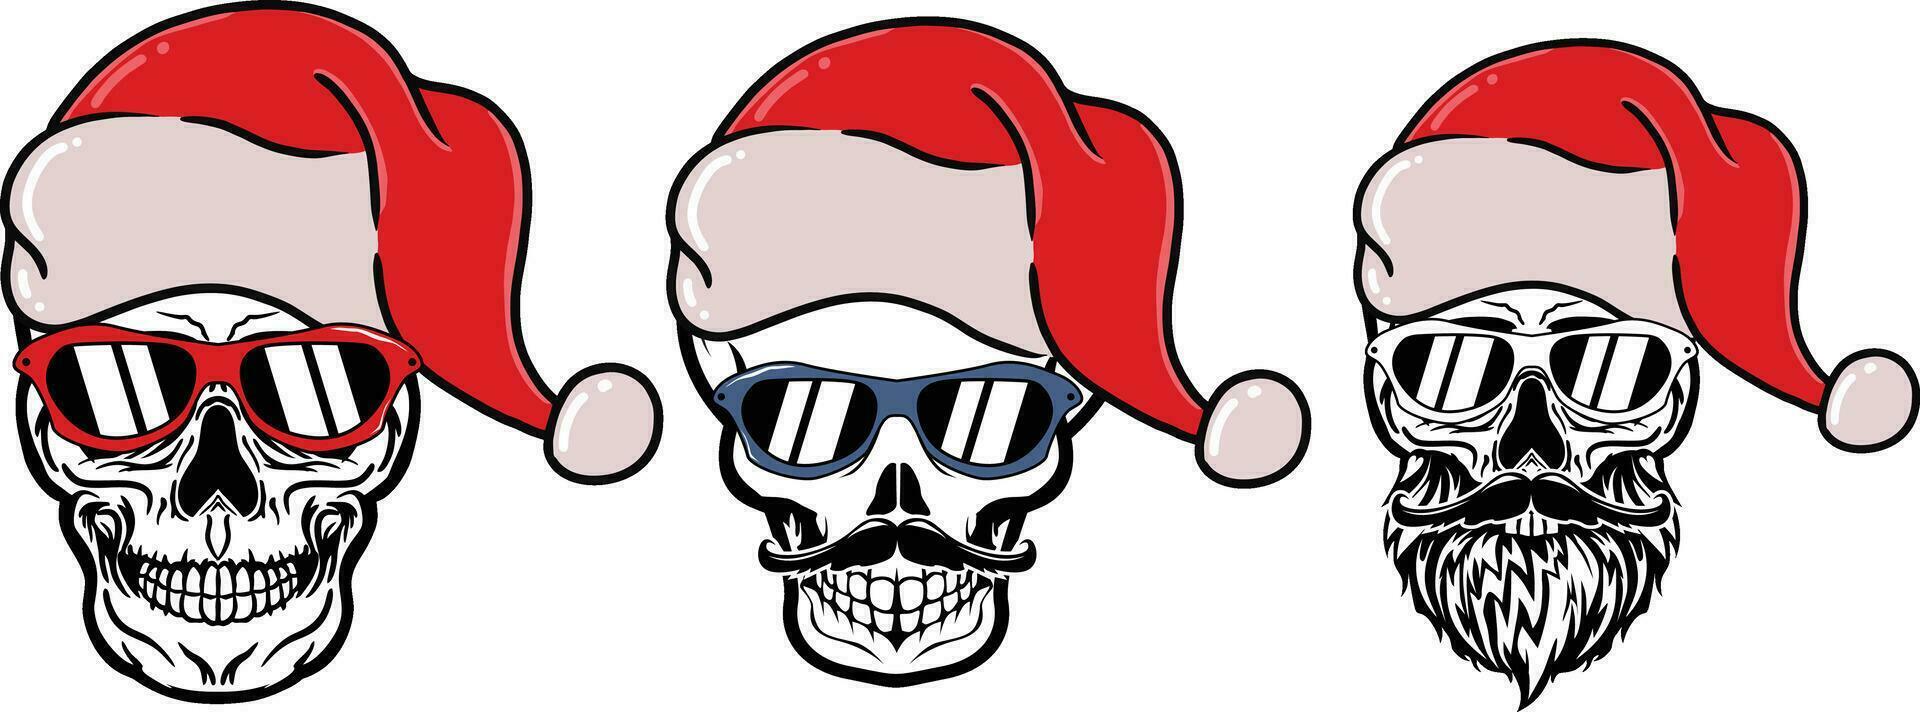 Santa skull vector mascot character